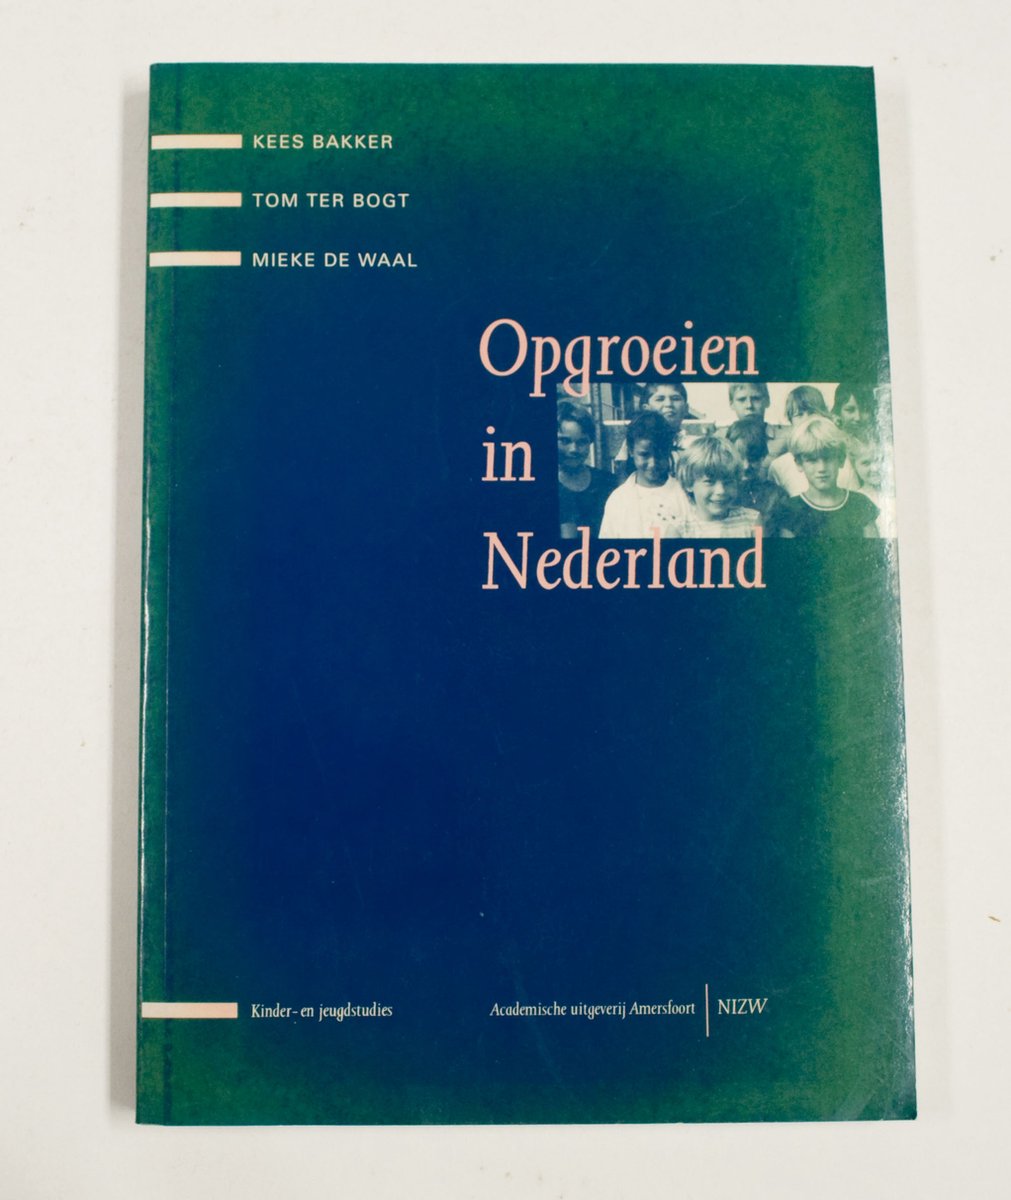 Opgroeien in Nederland / Kinder- en jeugdstudies